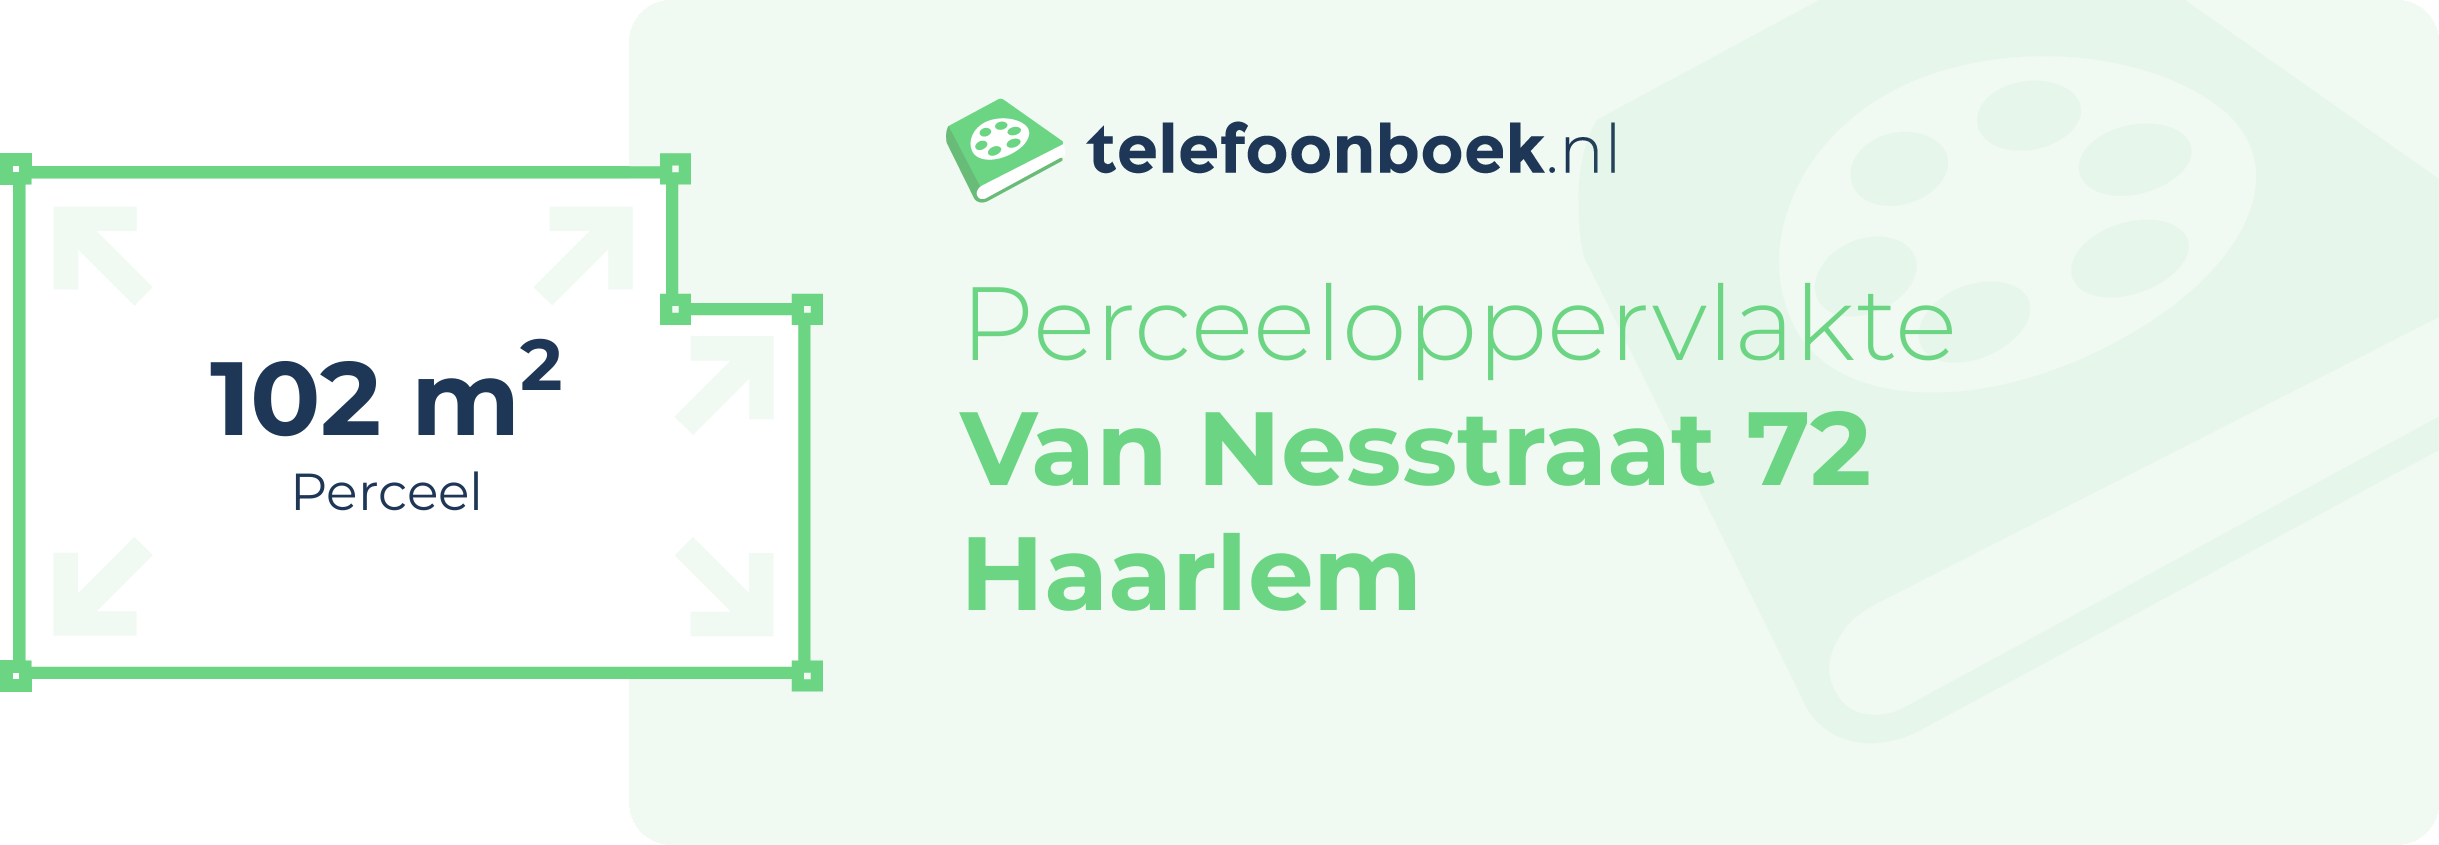 Perceeloppervlakte Van Nesstraat 72 Haarlem